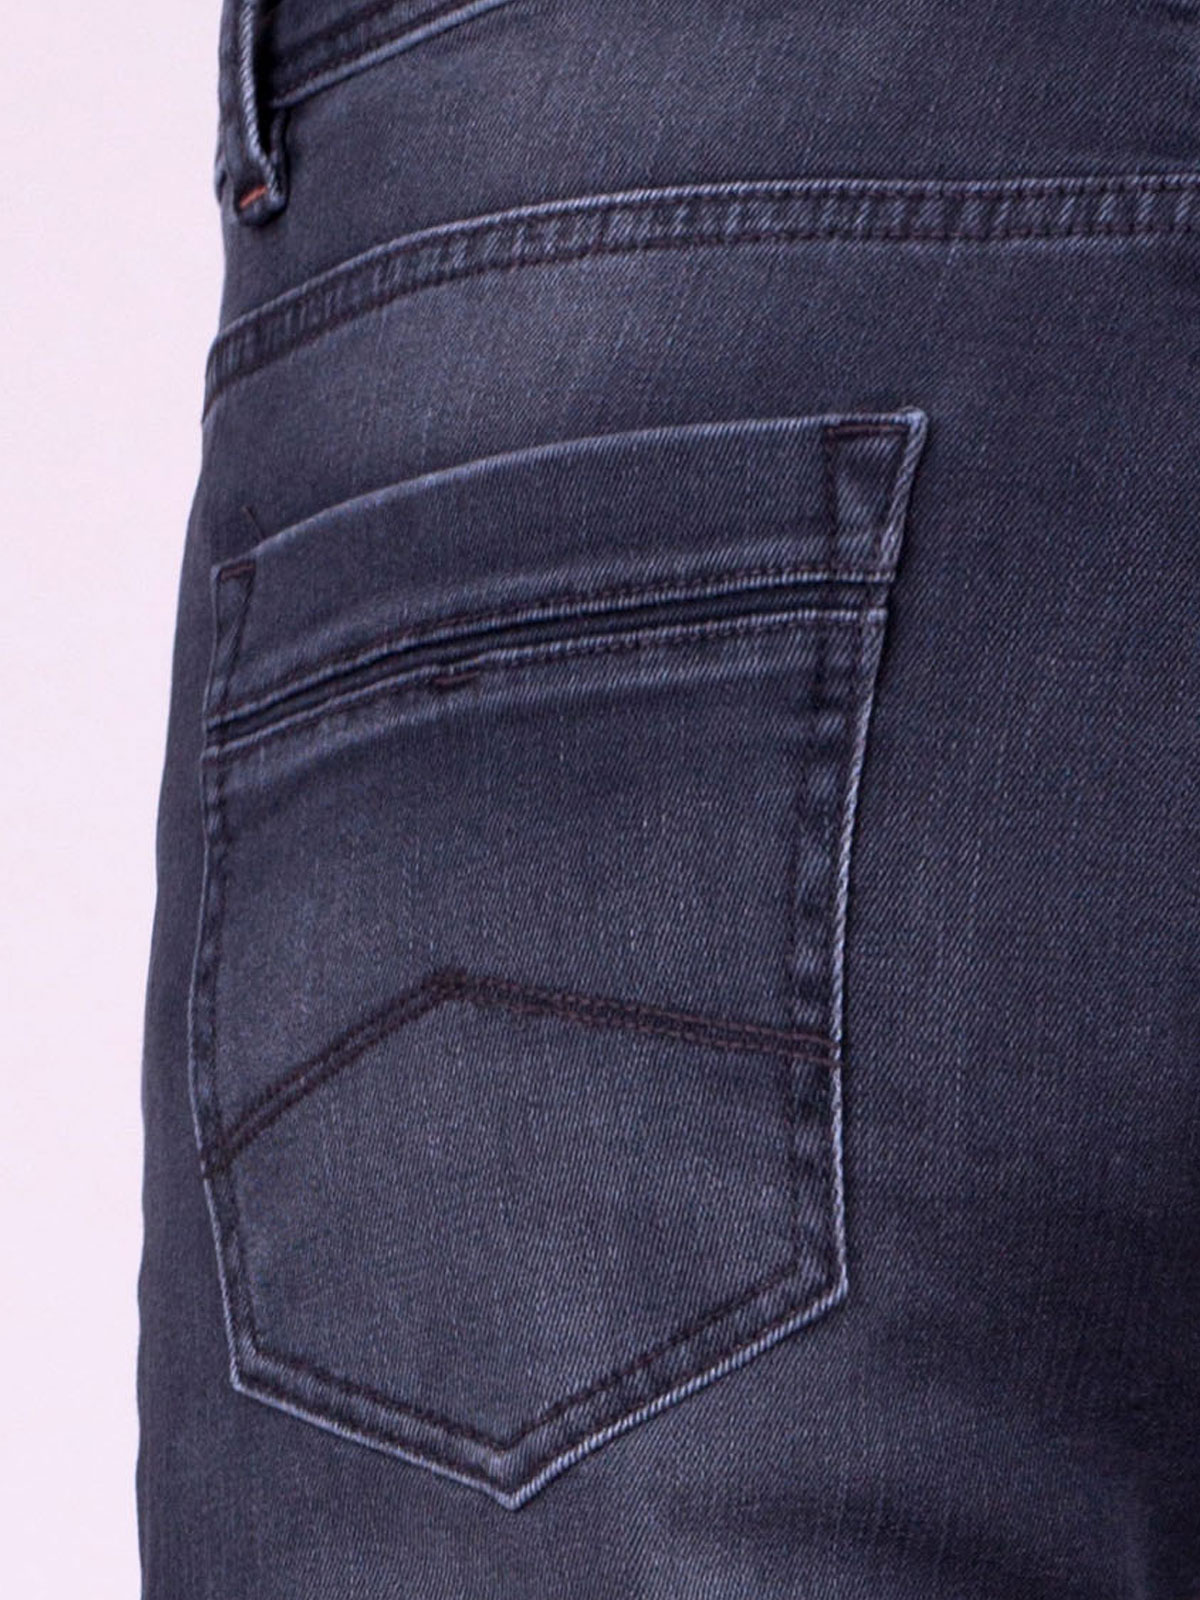 Graphite gray jeans - 62116 € 27.56 img4